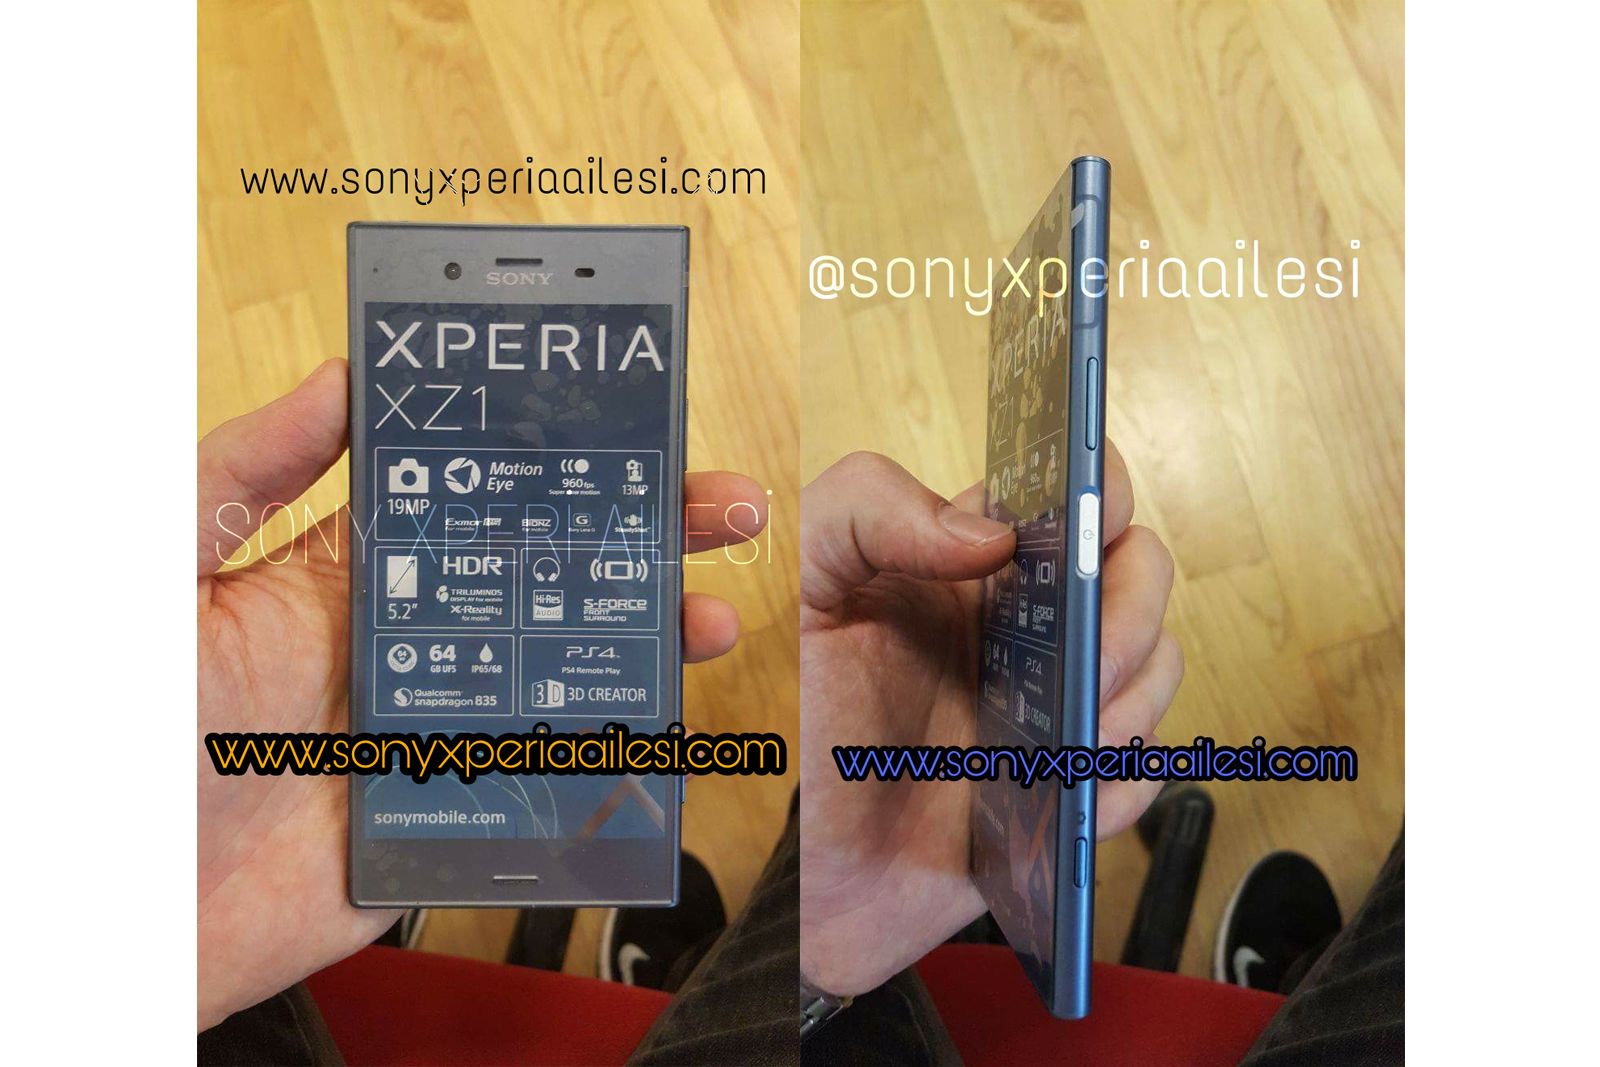 Sony Xperia Xz1 Rear Shell And Specs Leaked image 2